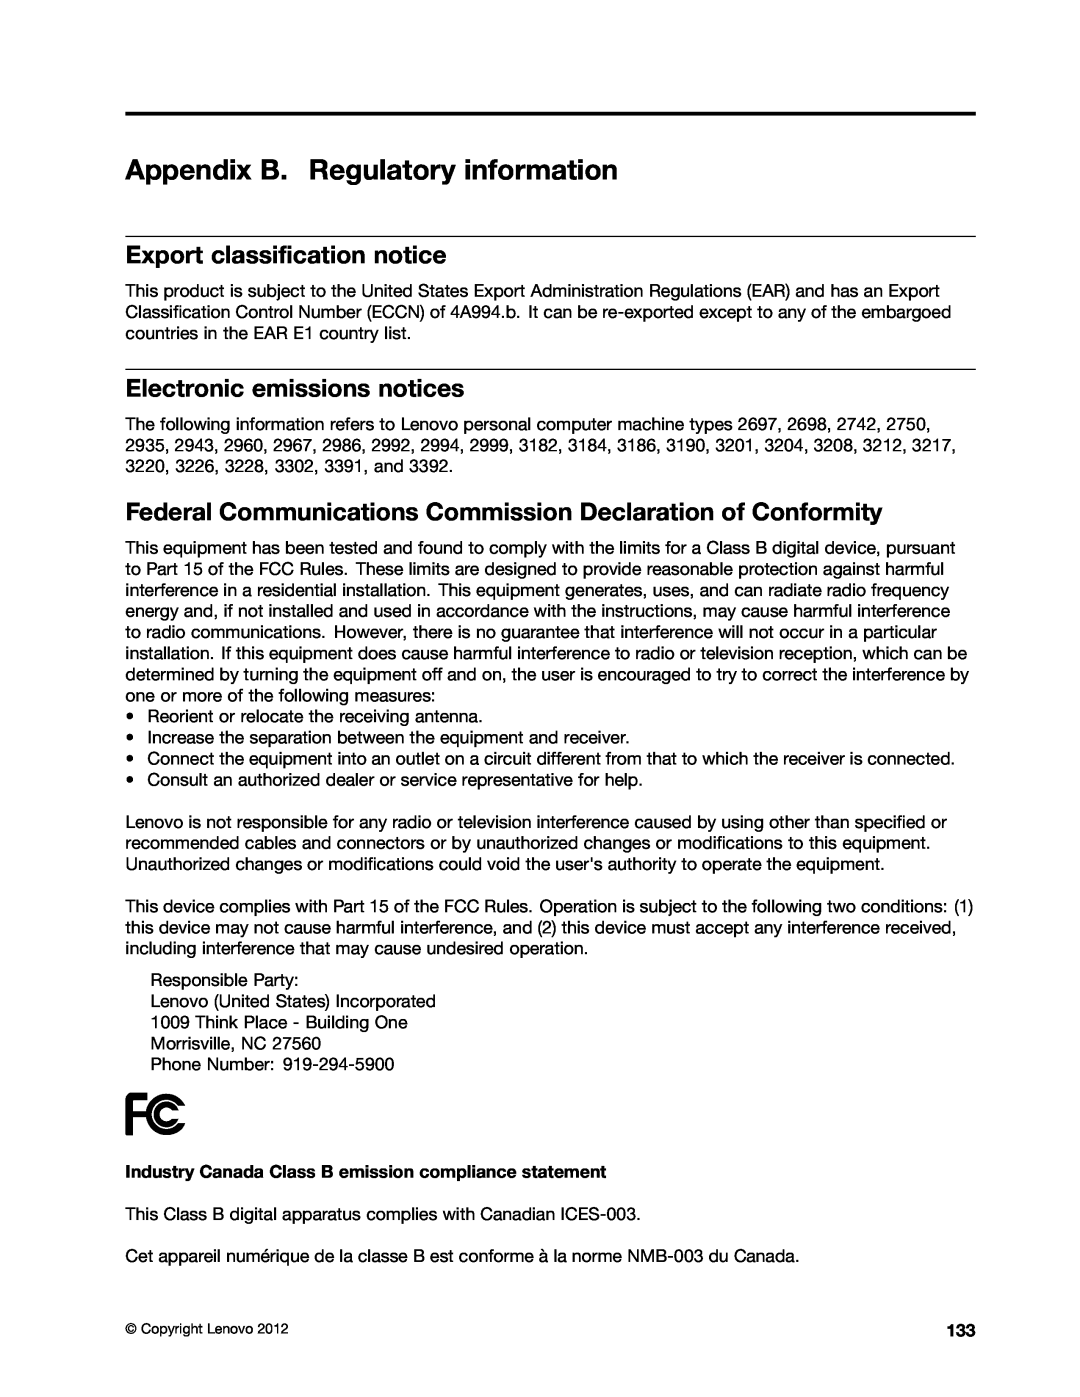 Lenovo 2697, 2756D7U manual Appendix B. Regulatory information, Export classification notice, Electronic emissions notices 